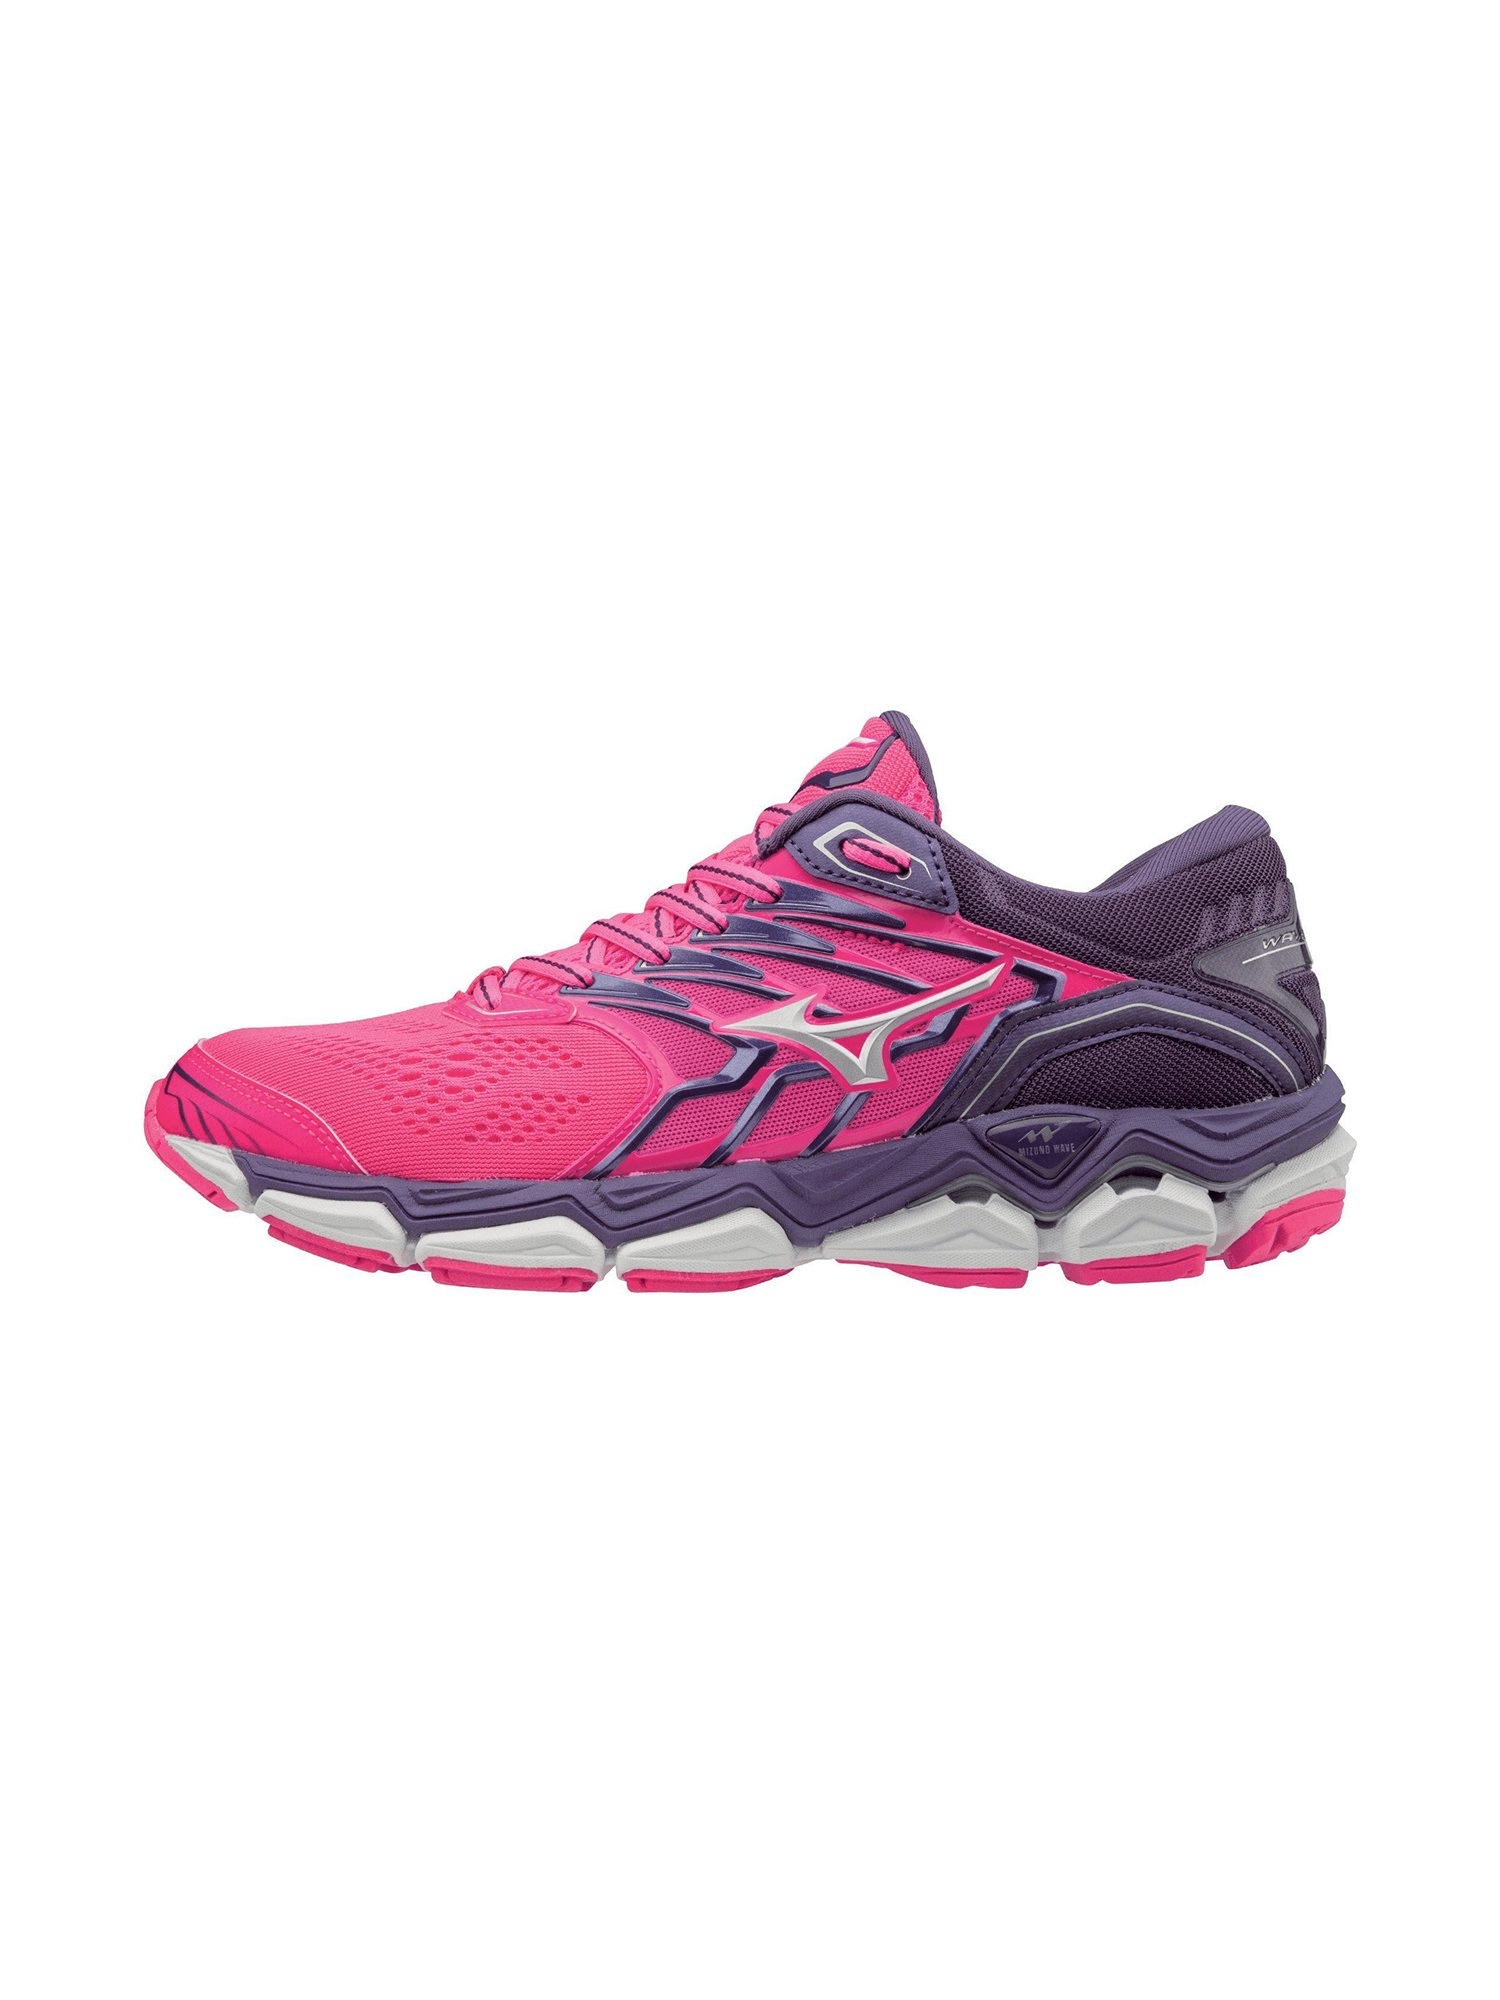 Mizuno Women's Wave Horizon 2 Running Shoe, Size 9, Pink Glo-White (1Q00) -  